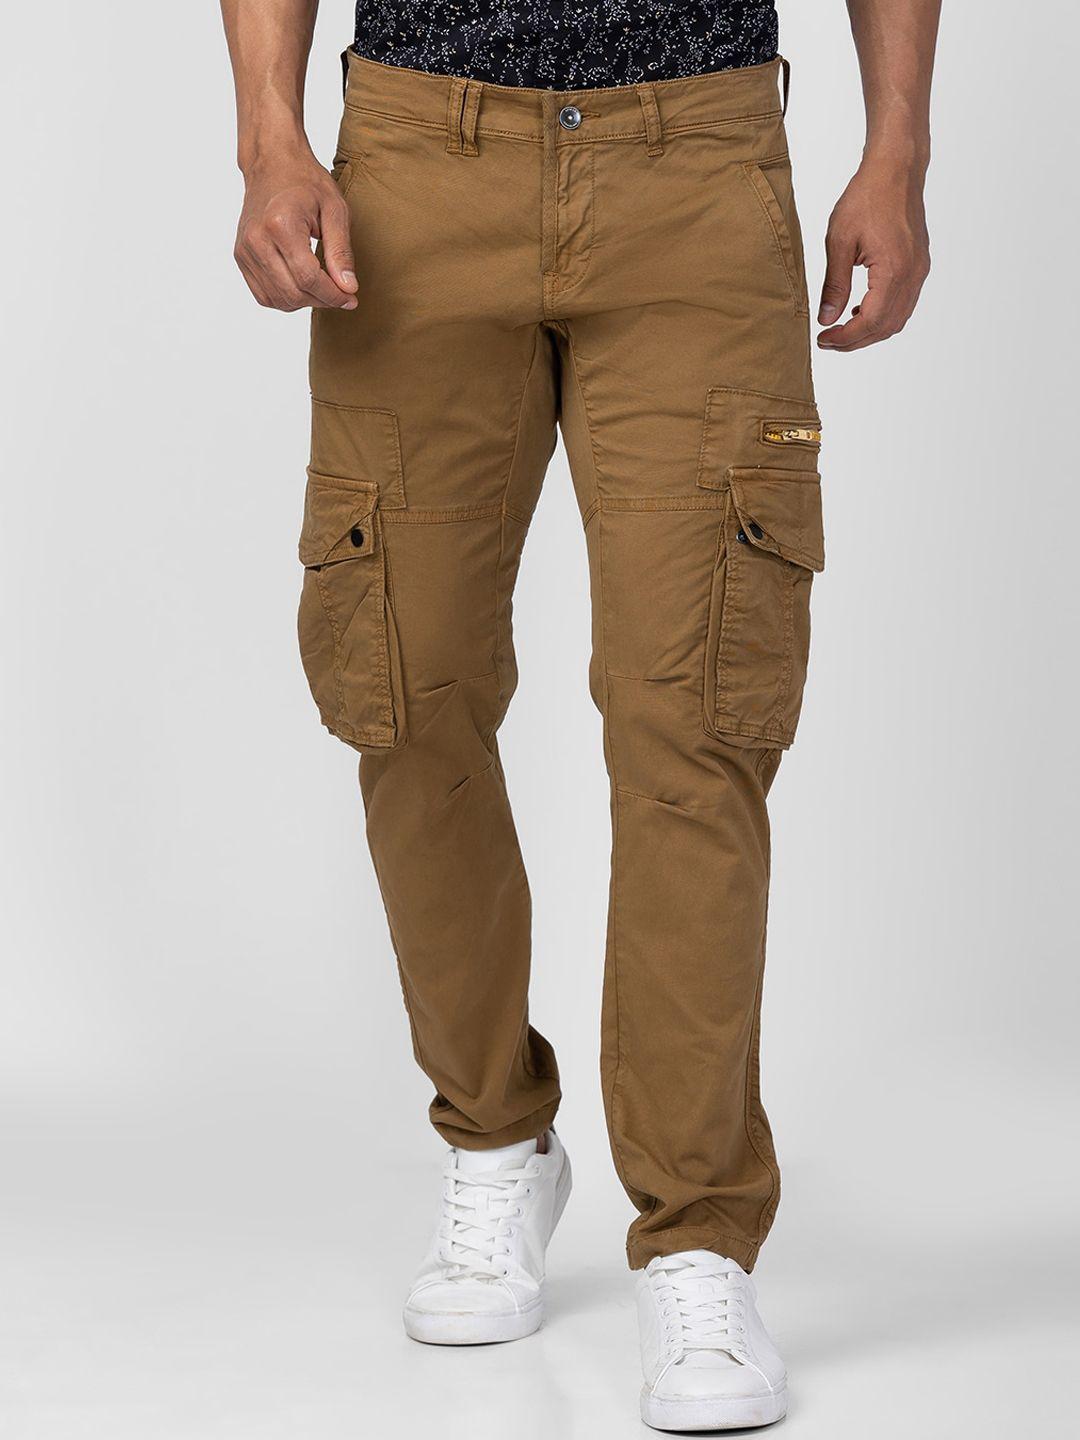 spykar-men-cotton-slim-fit-cargos-trousers